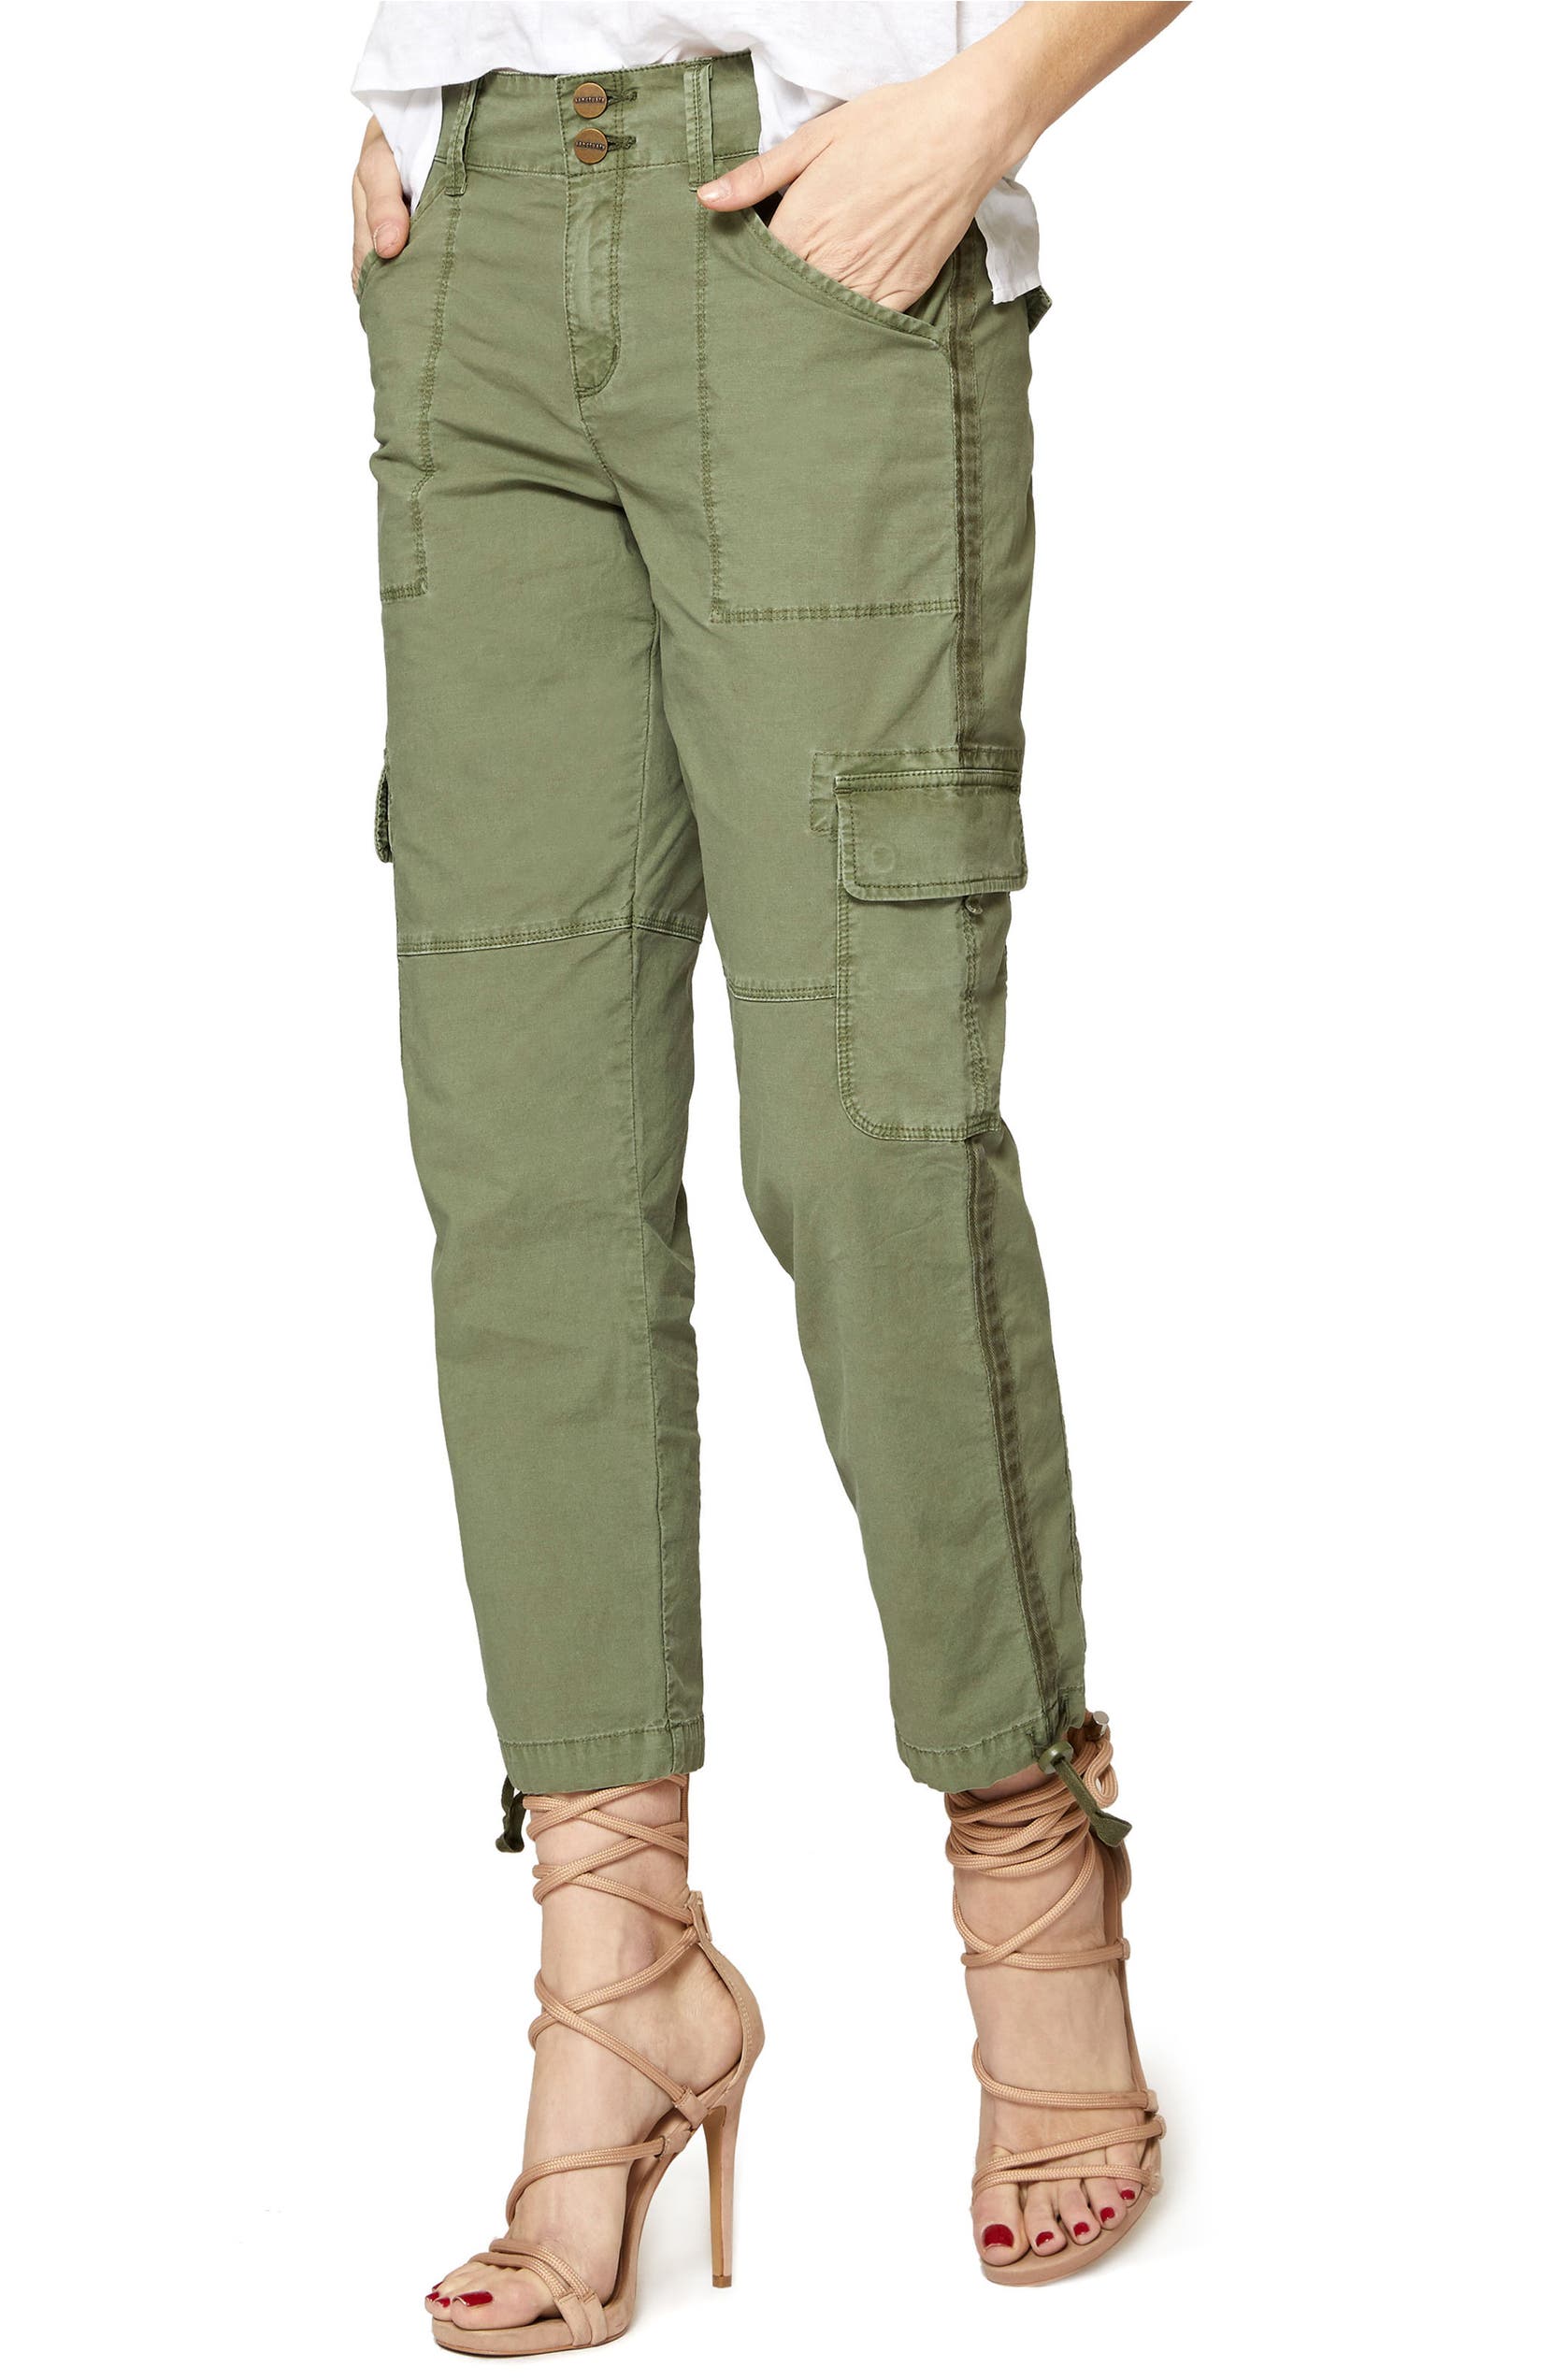 Terrain Crop Cargo Pants,
                        Main,
                        color, Cadet